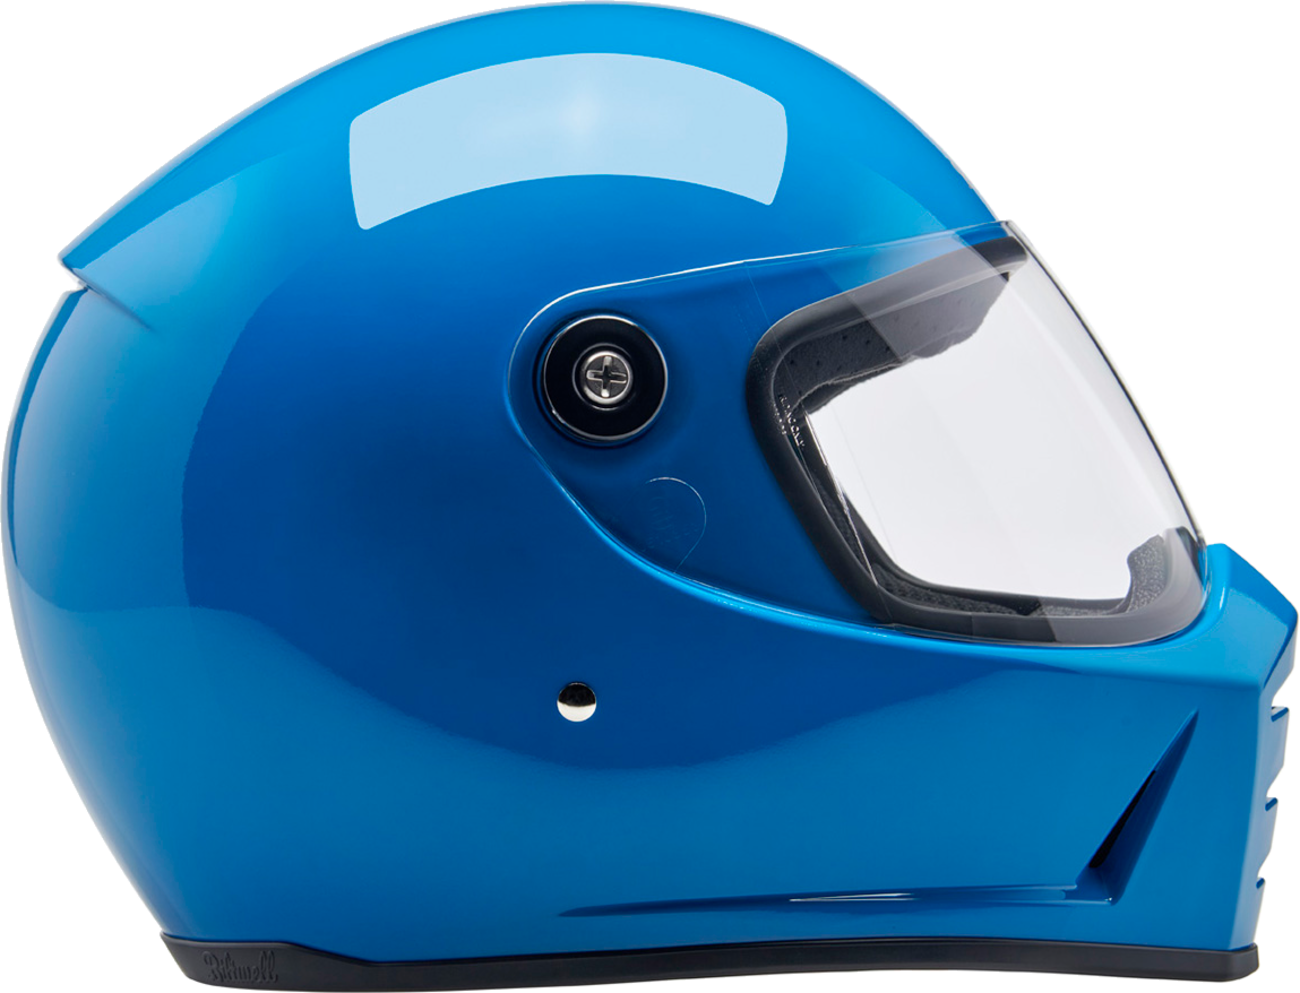 BILTWELL Lane Splitter Helmet - Gloss Tahoe Blue - XS 1004-129-501